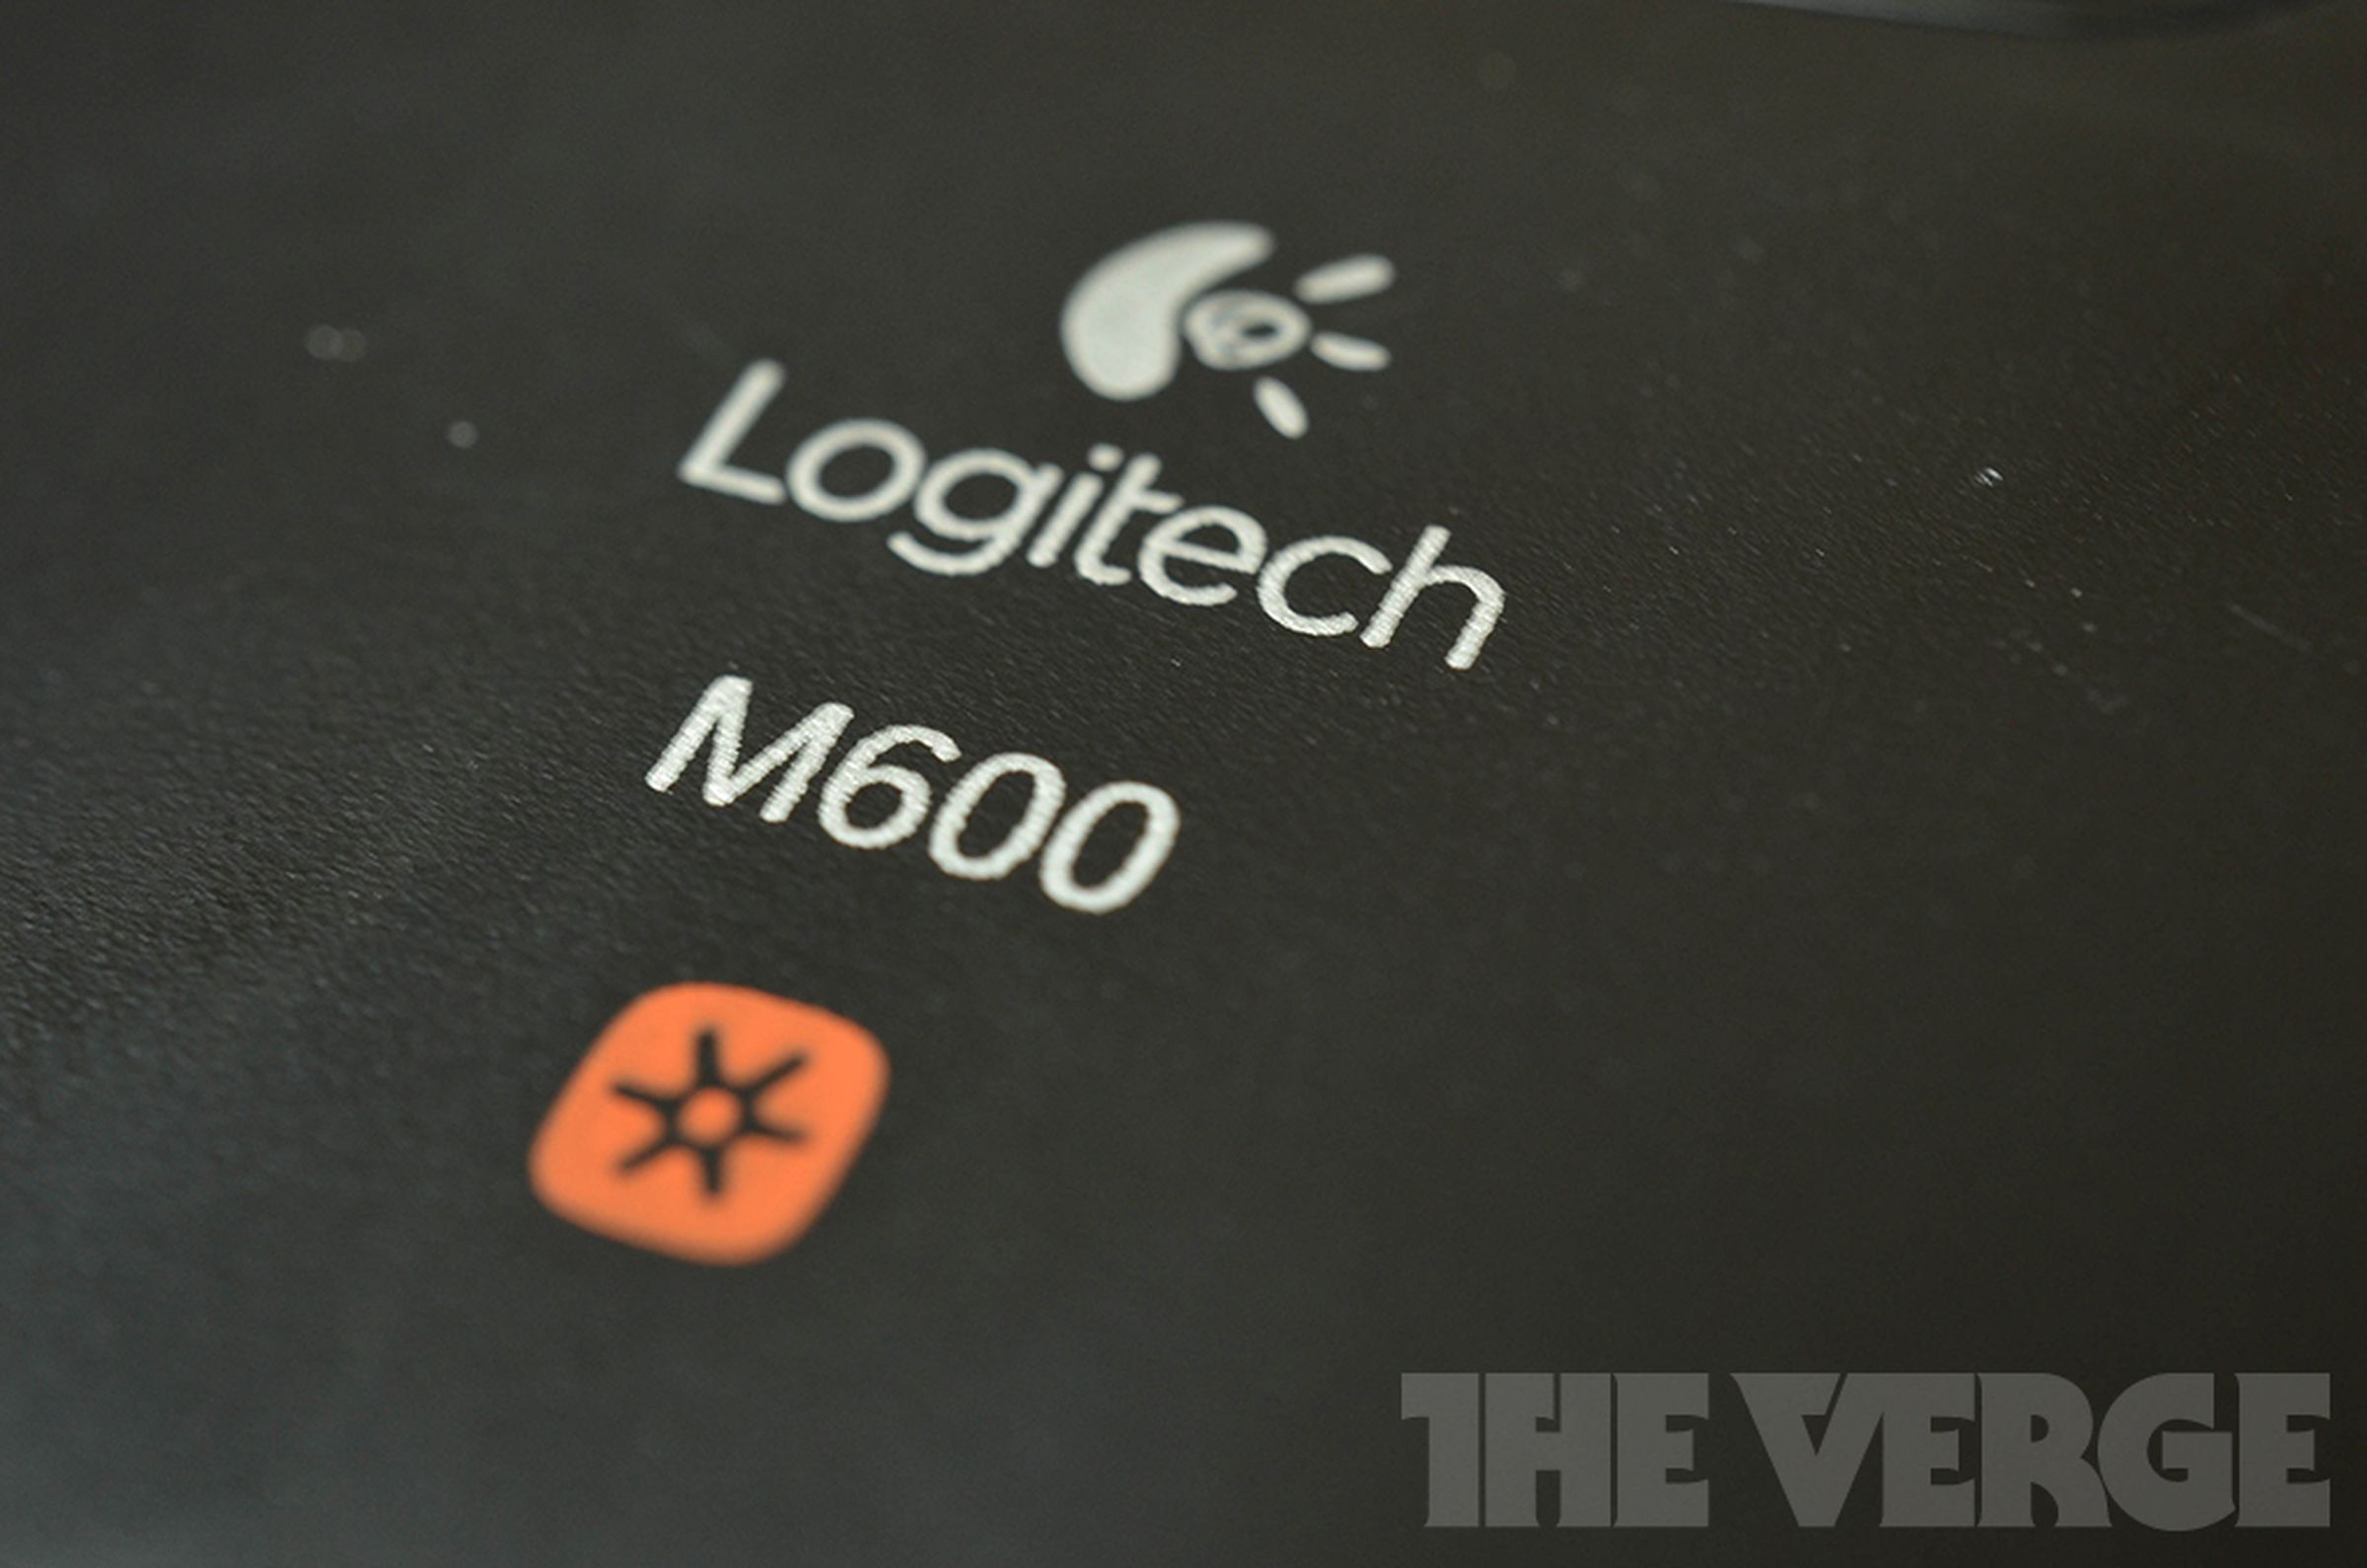 Logitech Touch Mouse M600 hands-on photos